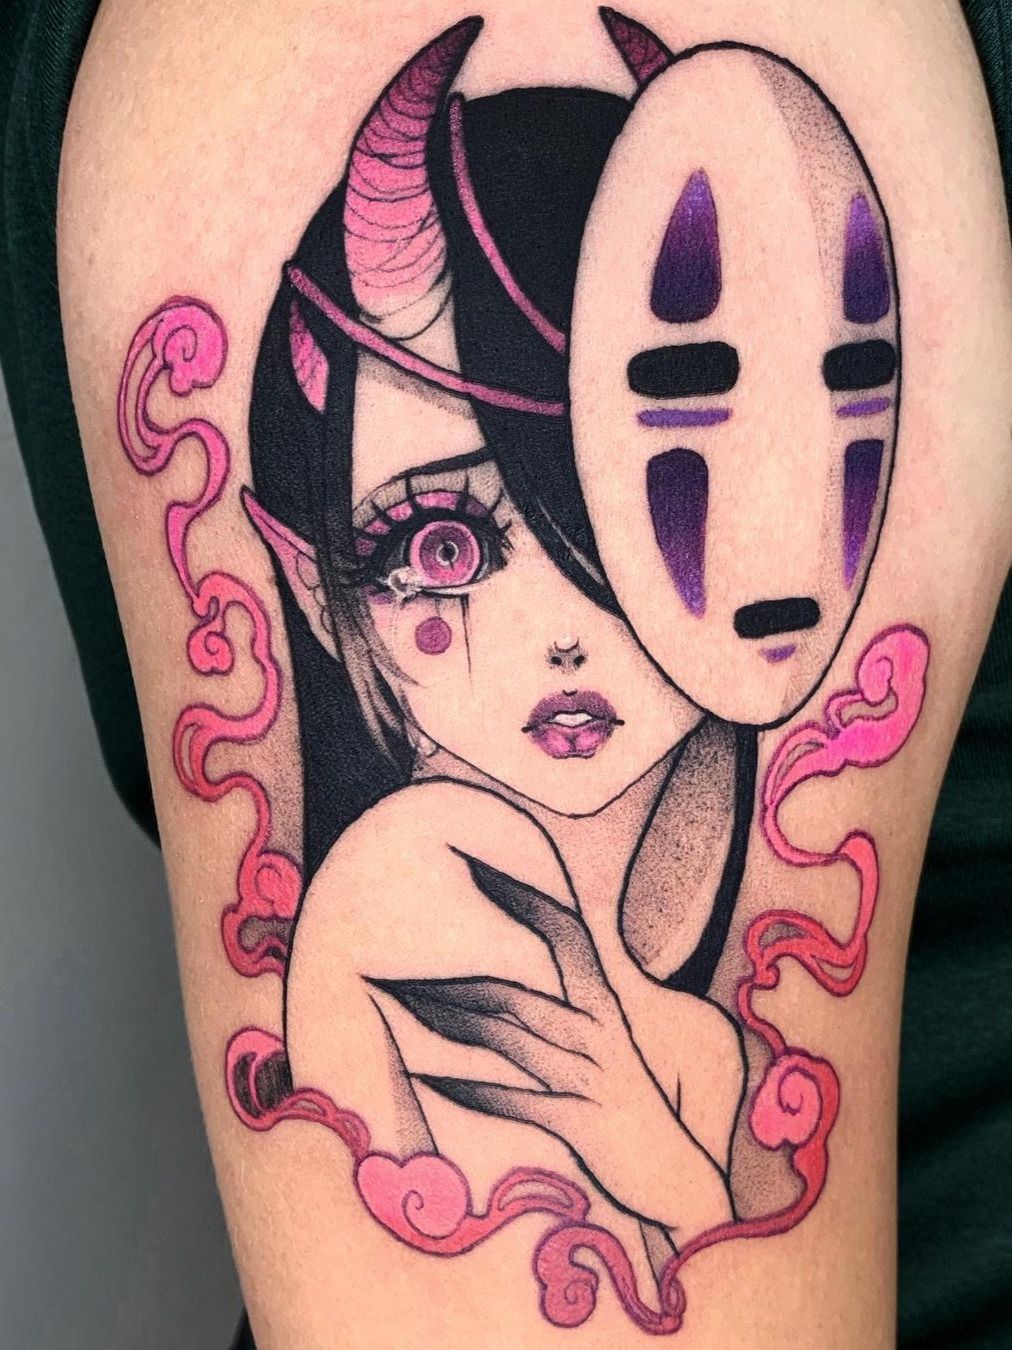 Amazon.com : Anime Girl Temporary Tattoo Sticker (Set of 2) - OhMyTat :  Beauty & Personal Care